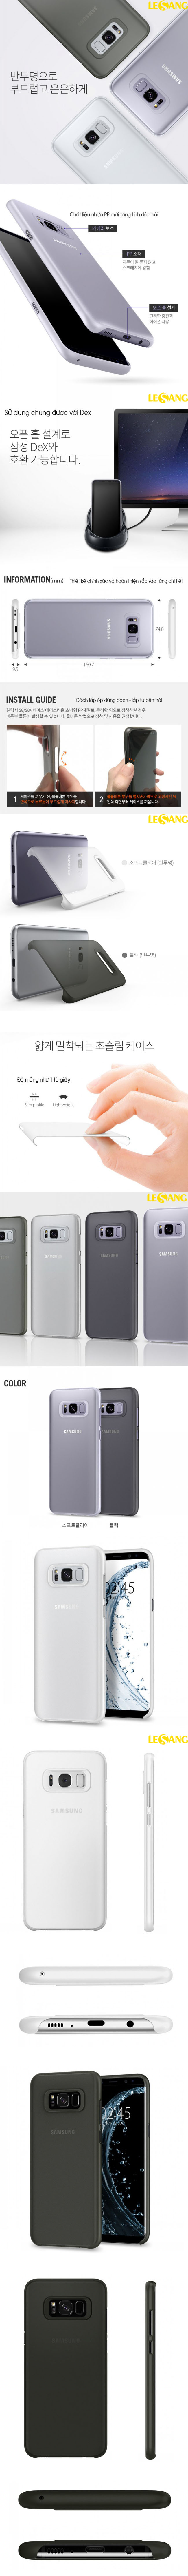 Ốp lưng Galaxy S8 Plus Spigen Air Skin 0.4mm 12365